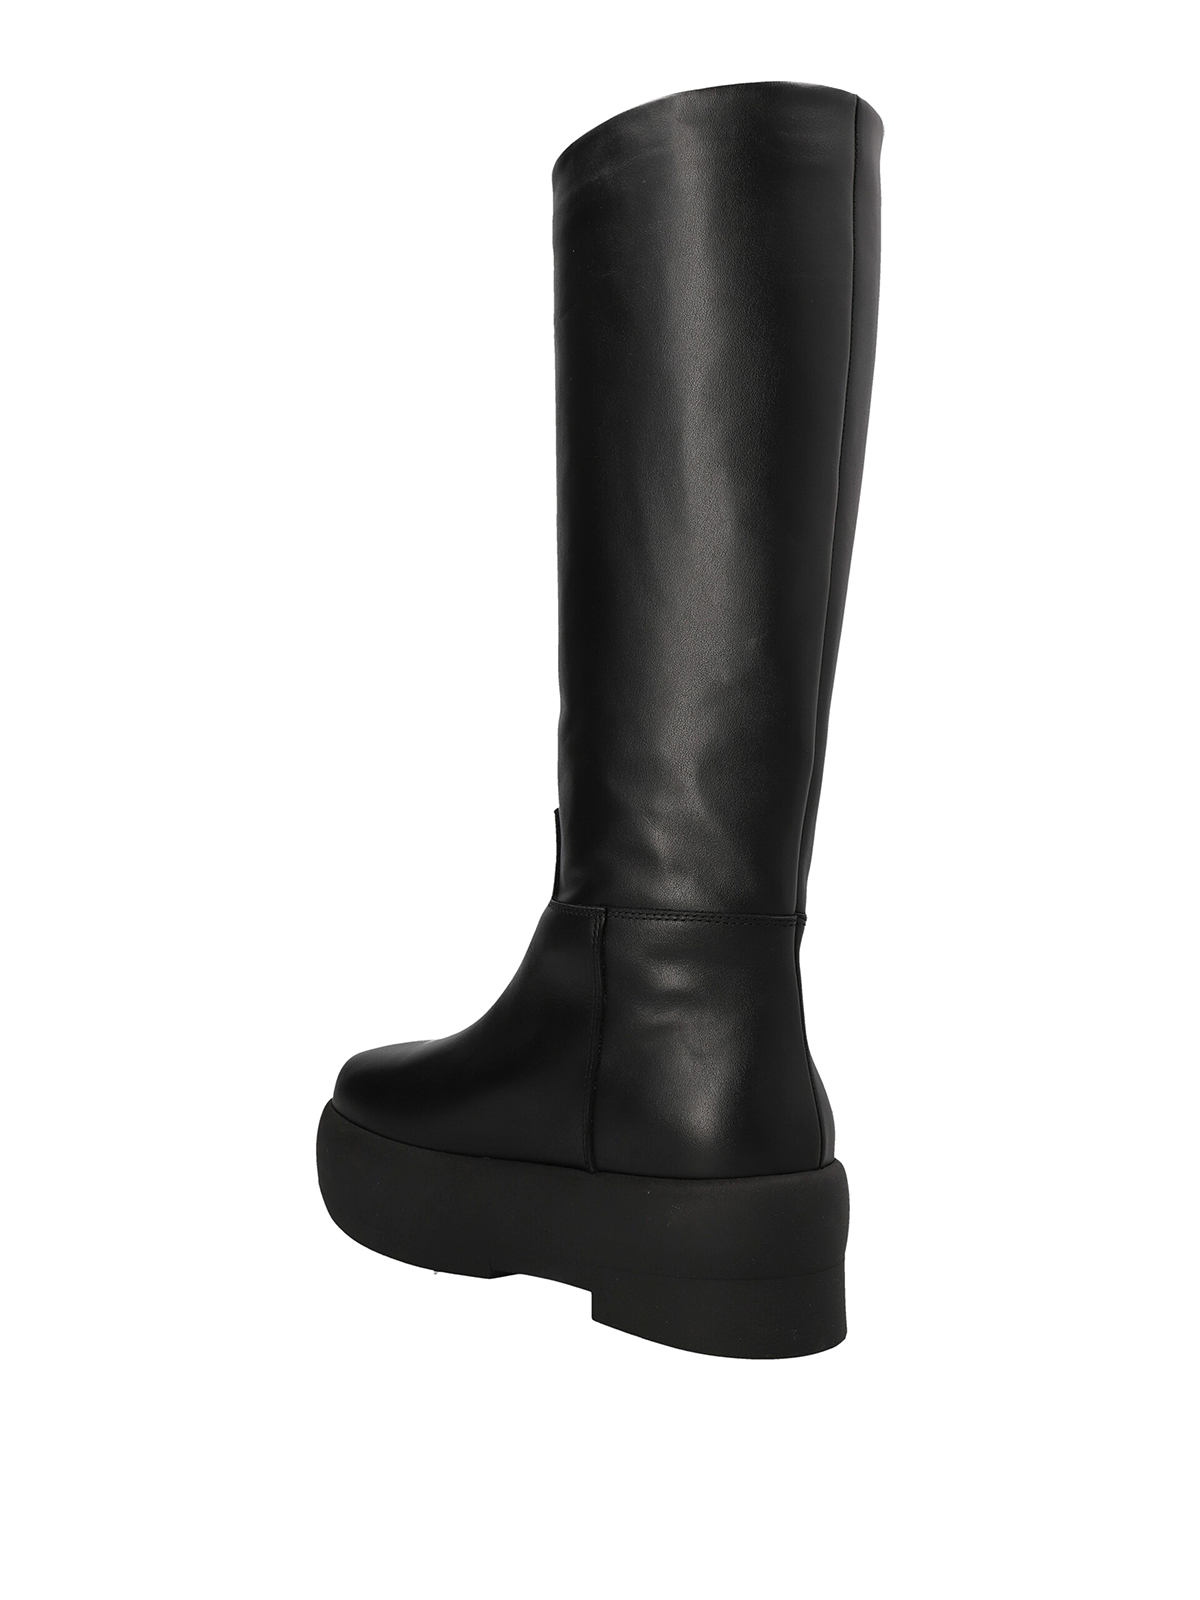 Boots Gia Borghini - Gia 16 Boots - GIA165000 | Shop online at iKRIX